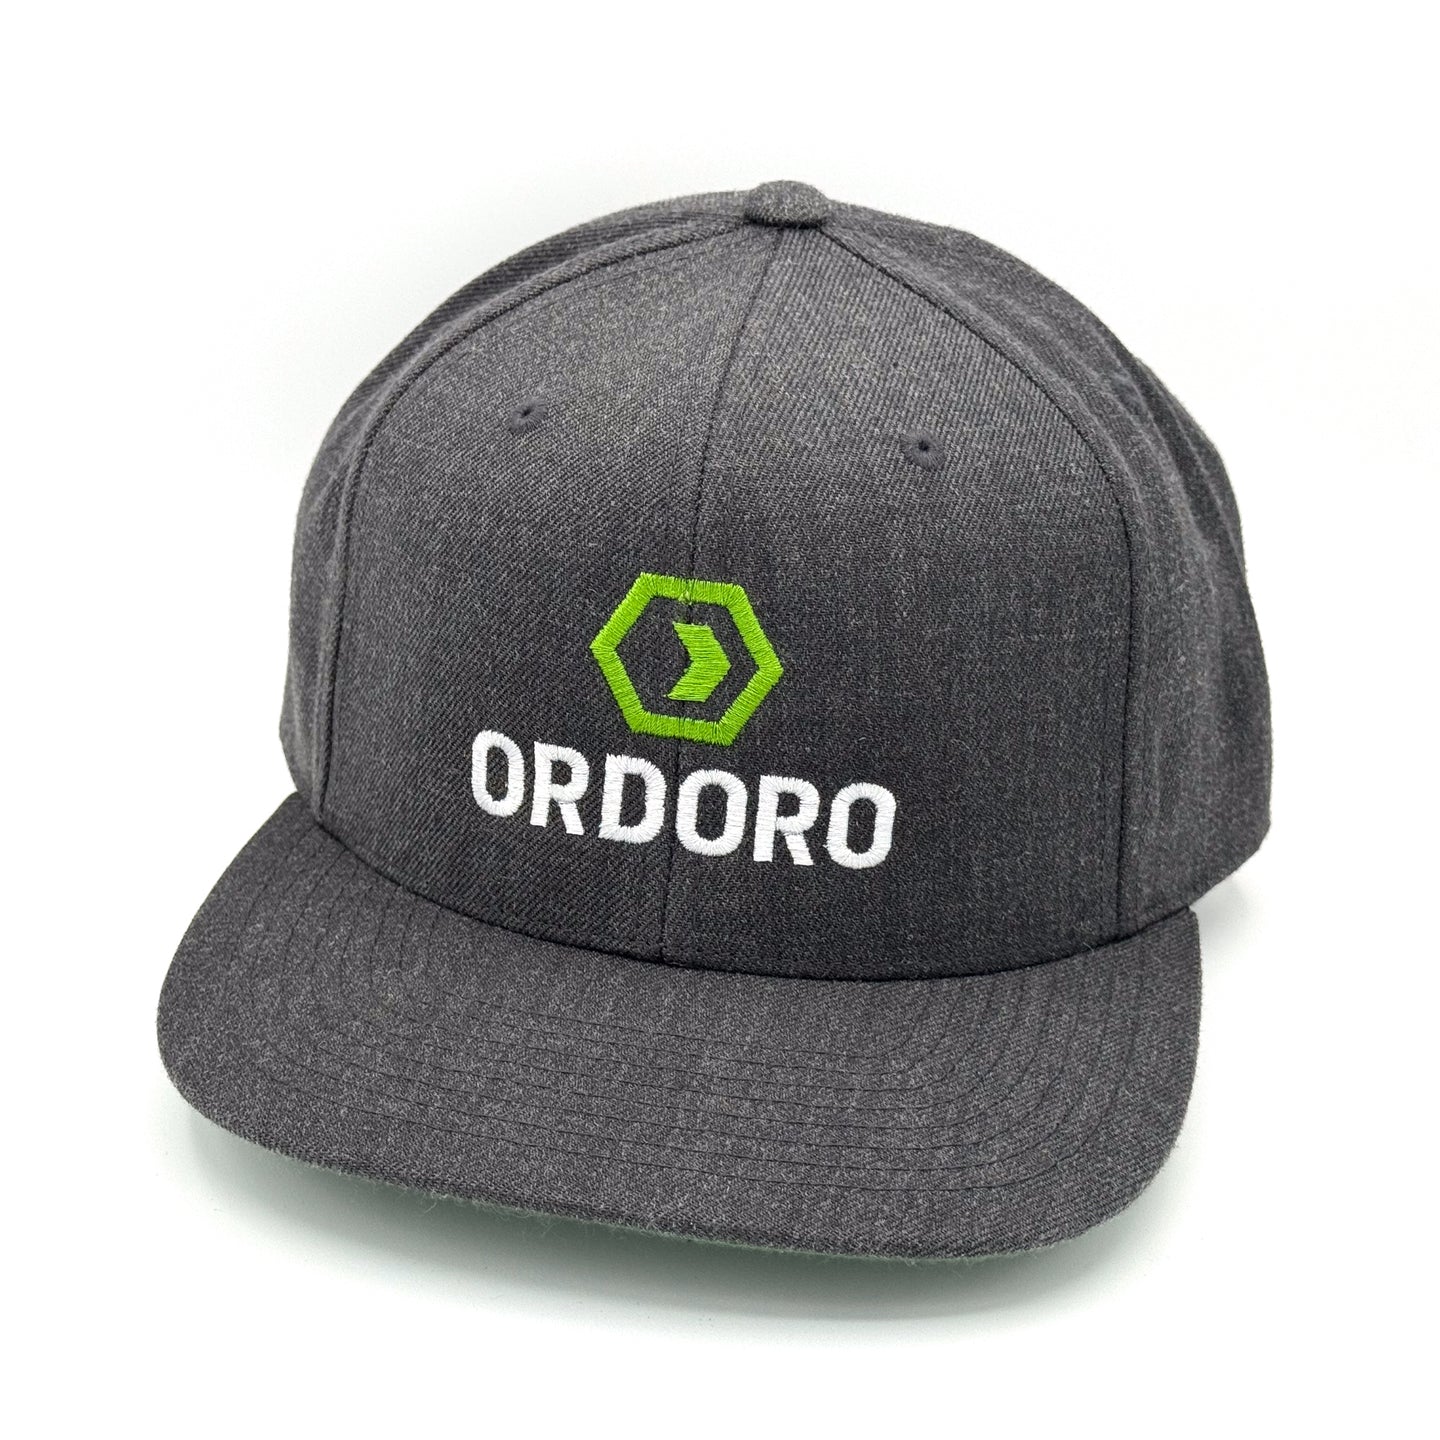 Ordoro Snapback Hat - White & Green